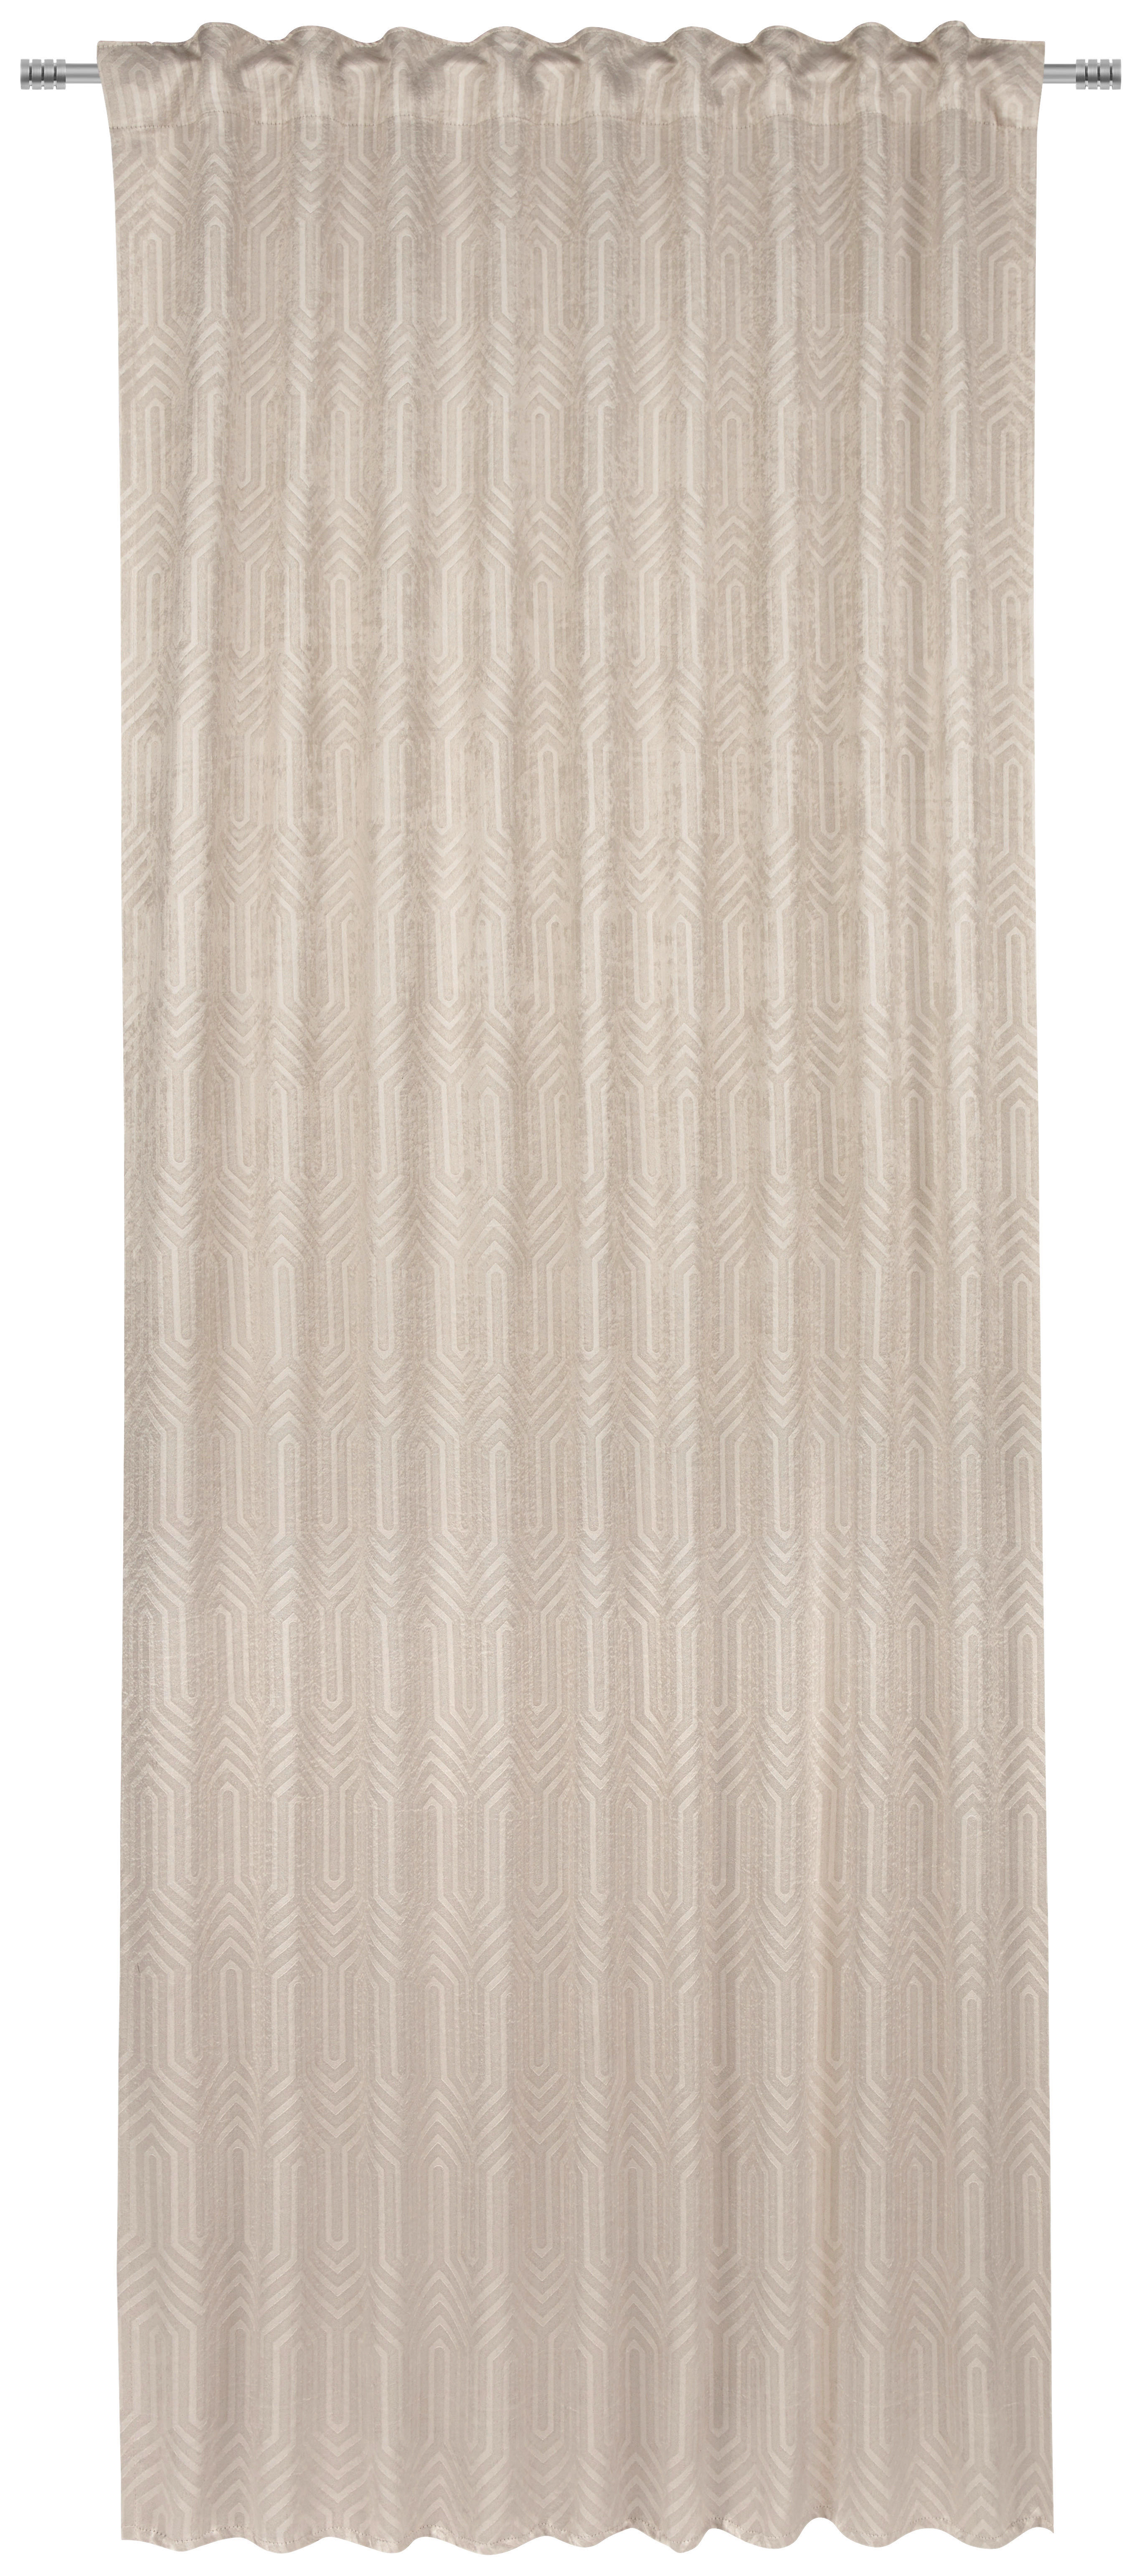 GARDINLÄNGD mörkläggning  - beige, Design, textil (135/245cm) - Esposa